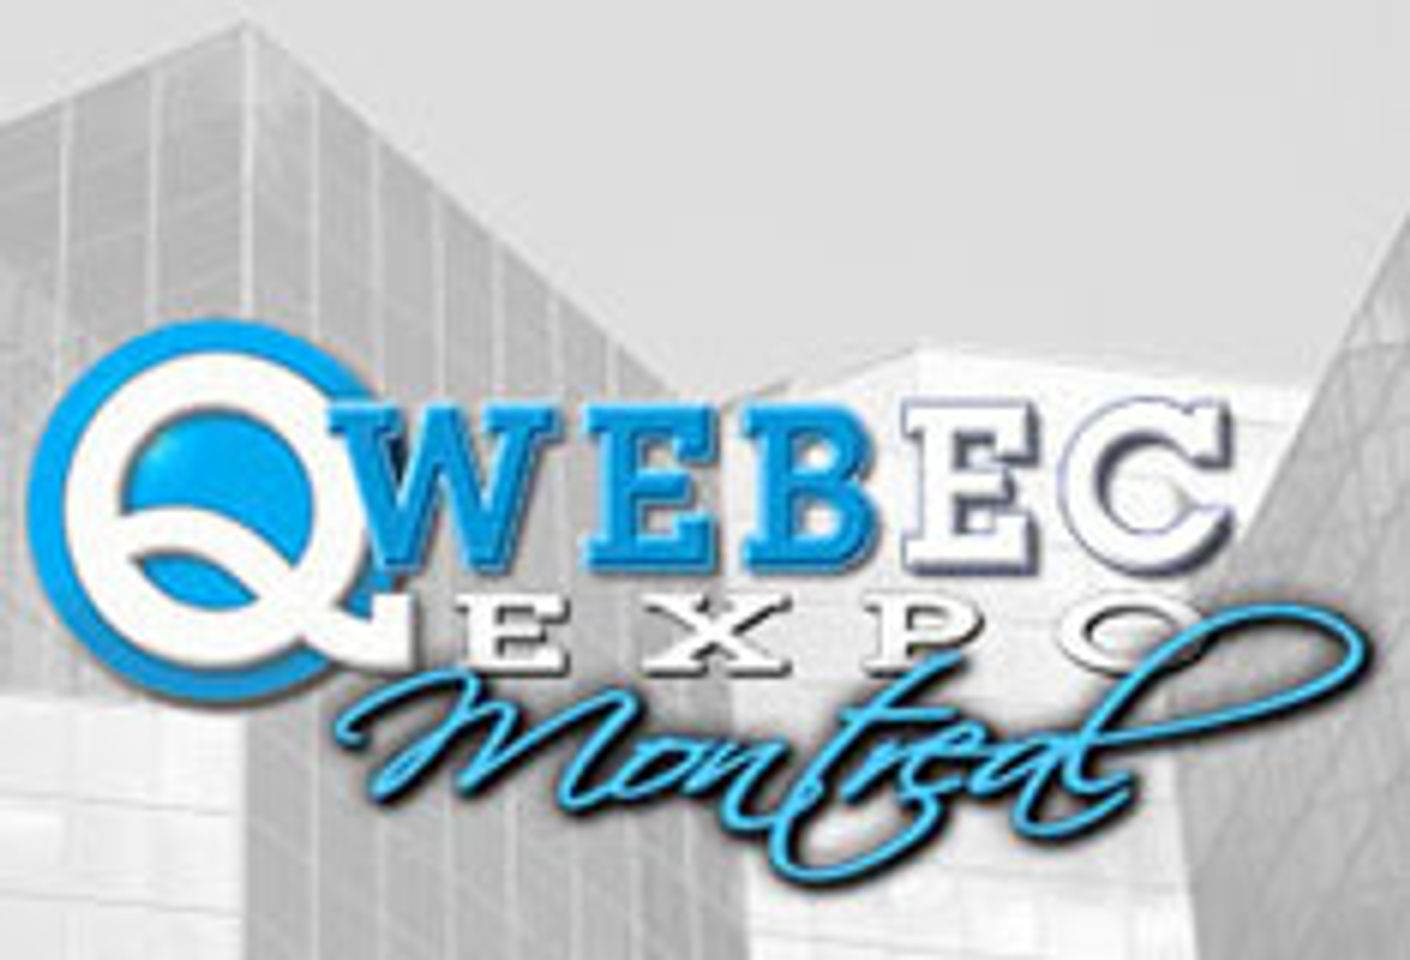 QWEBEC Expo Releases 2014 Schedule